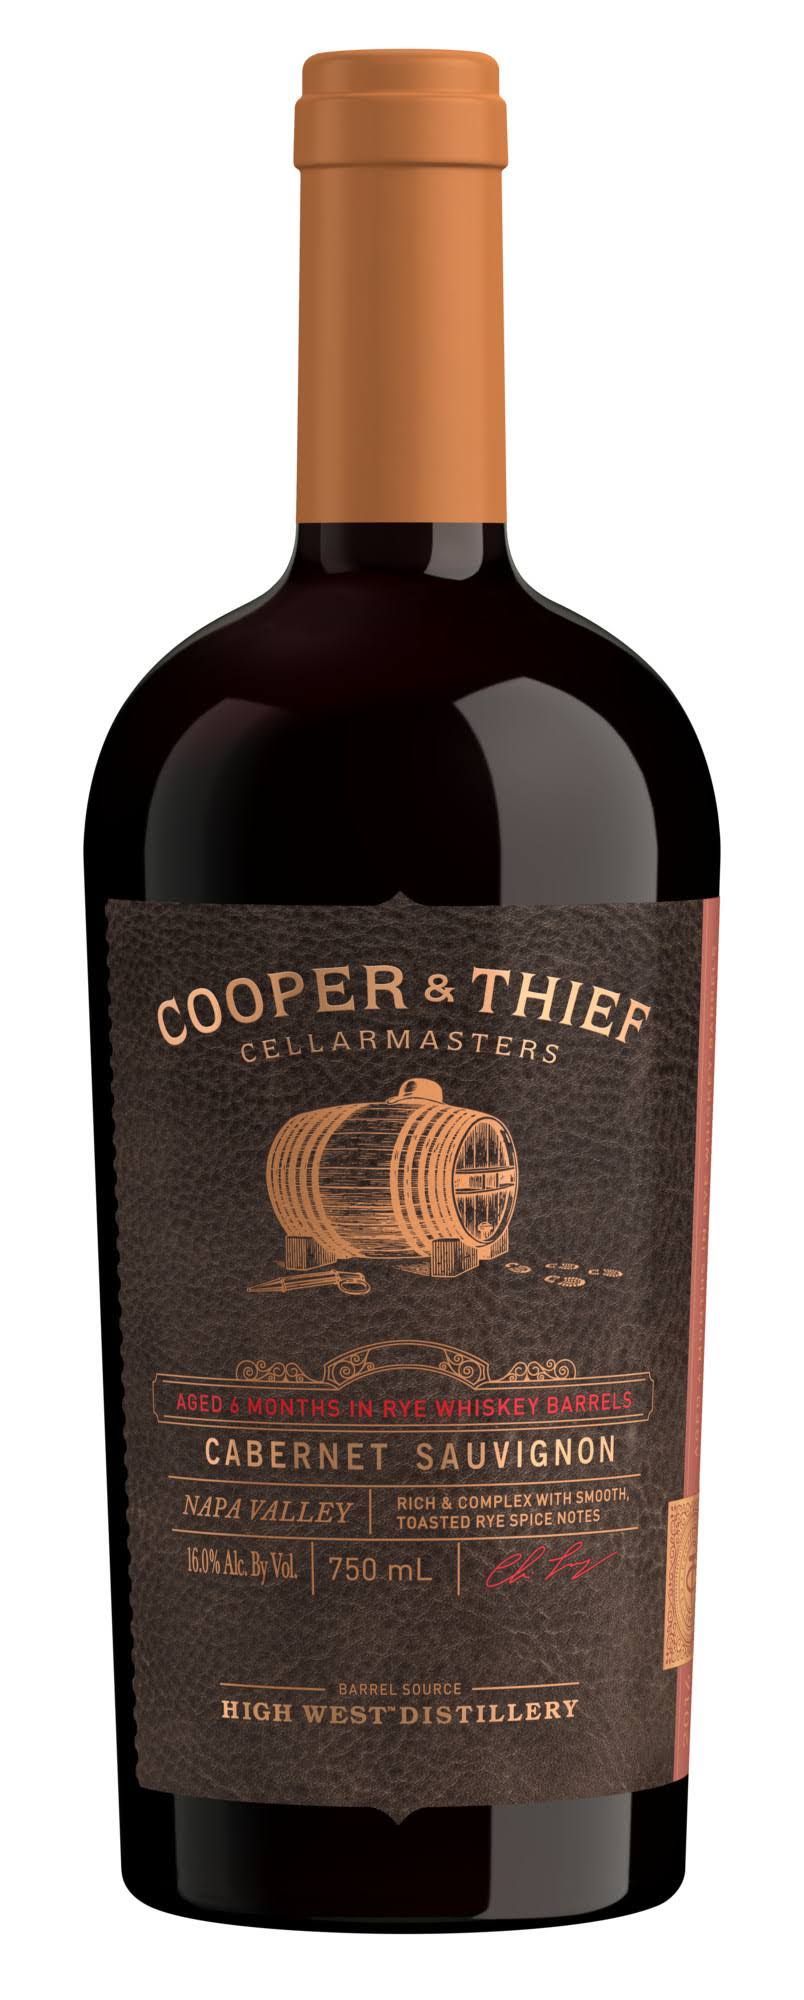 Cooper & Thief Rye Whiskey Aged Cabernet Sauvignon